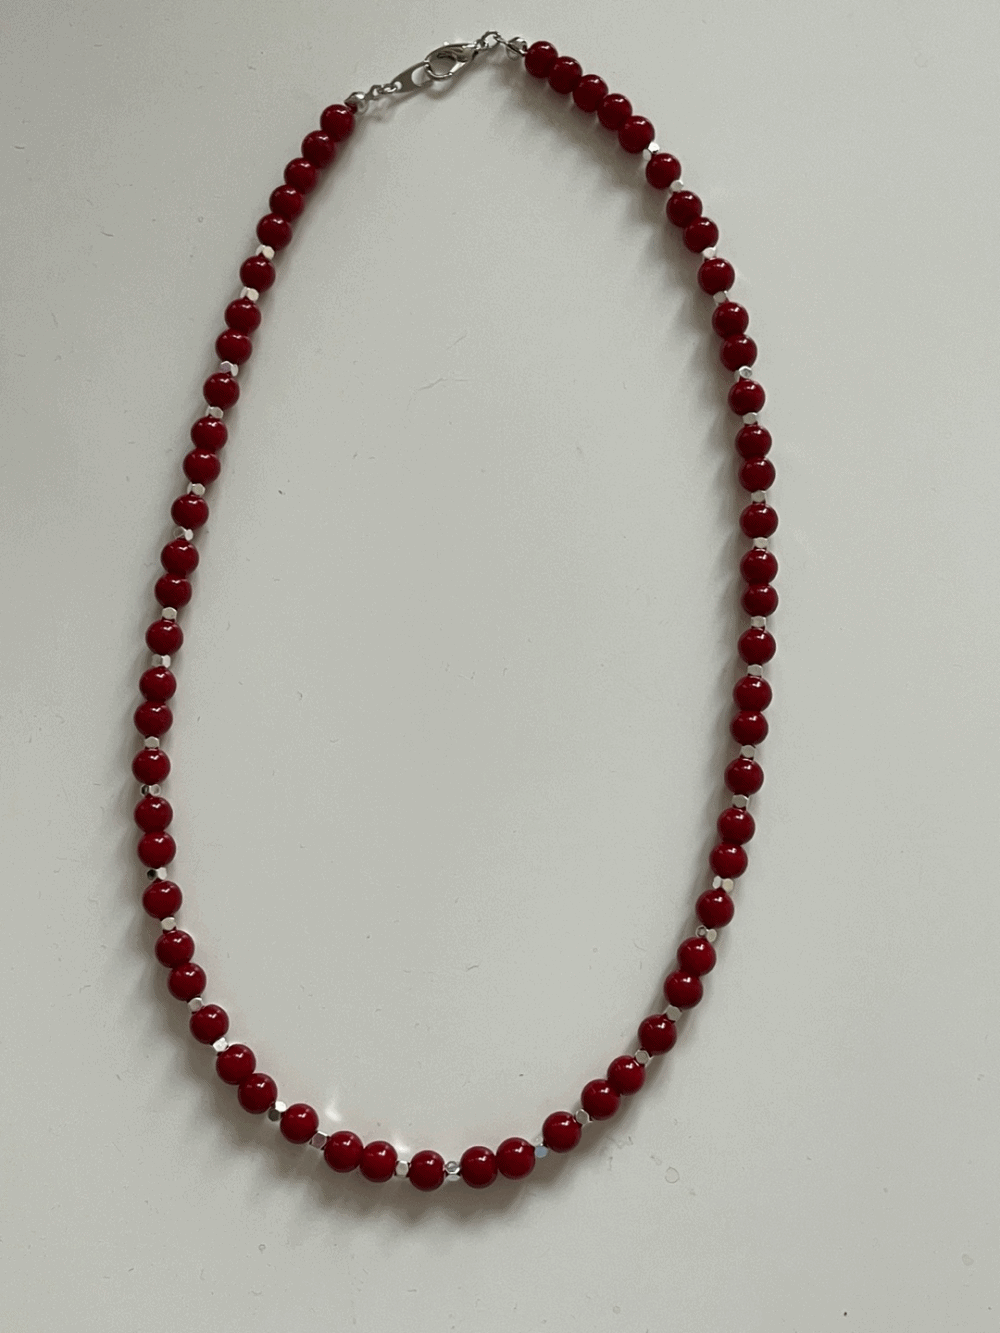 [Acc] Apple necklace / one color